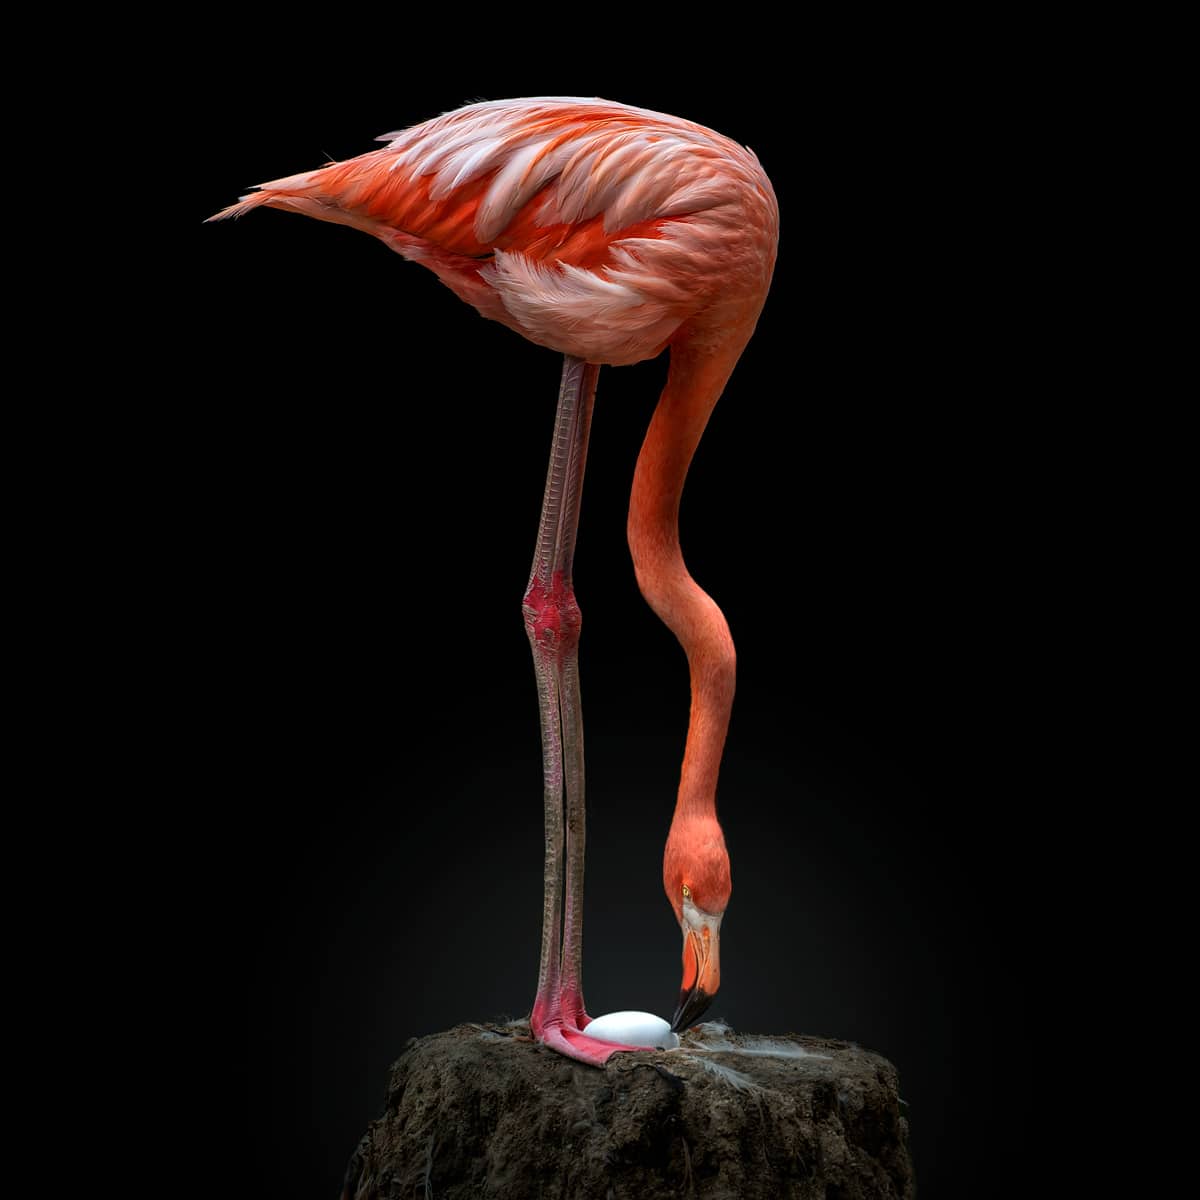 American flamingo (Phoenicopterus ruber) against a black background